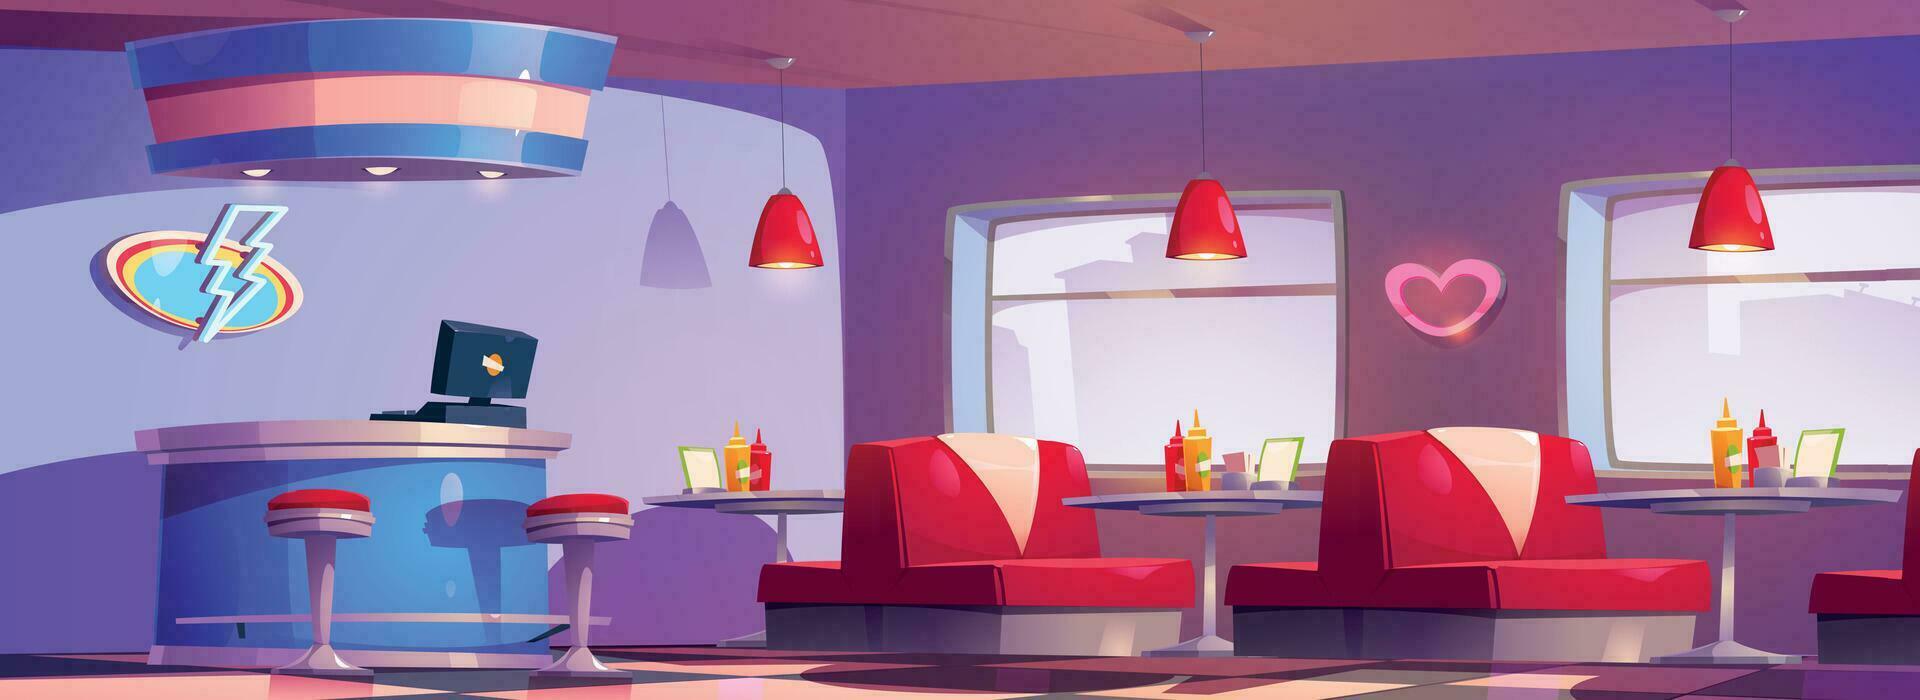 American retro diner interior with furniture vector